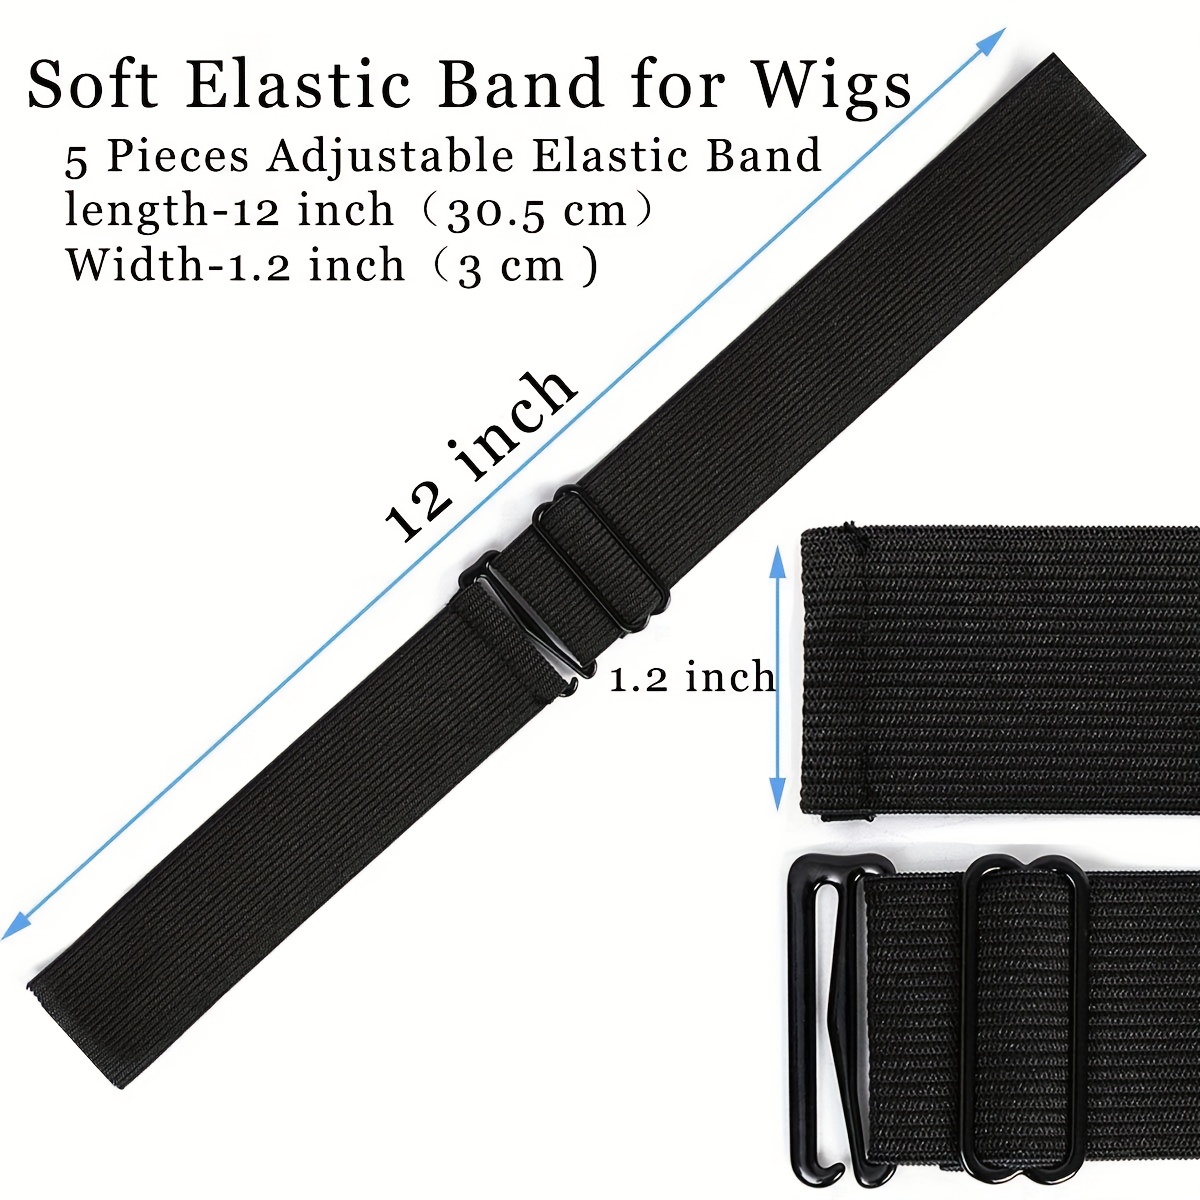 Adjustable Elastic Band For Wigs Removable Elastic Belt For